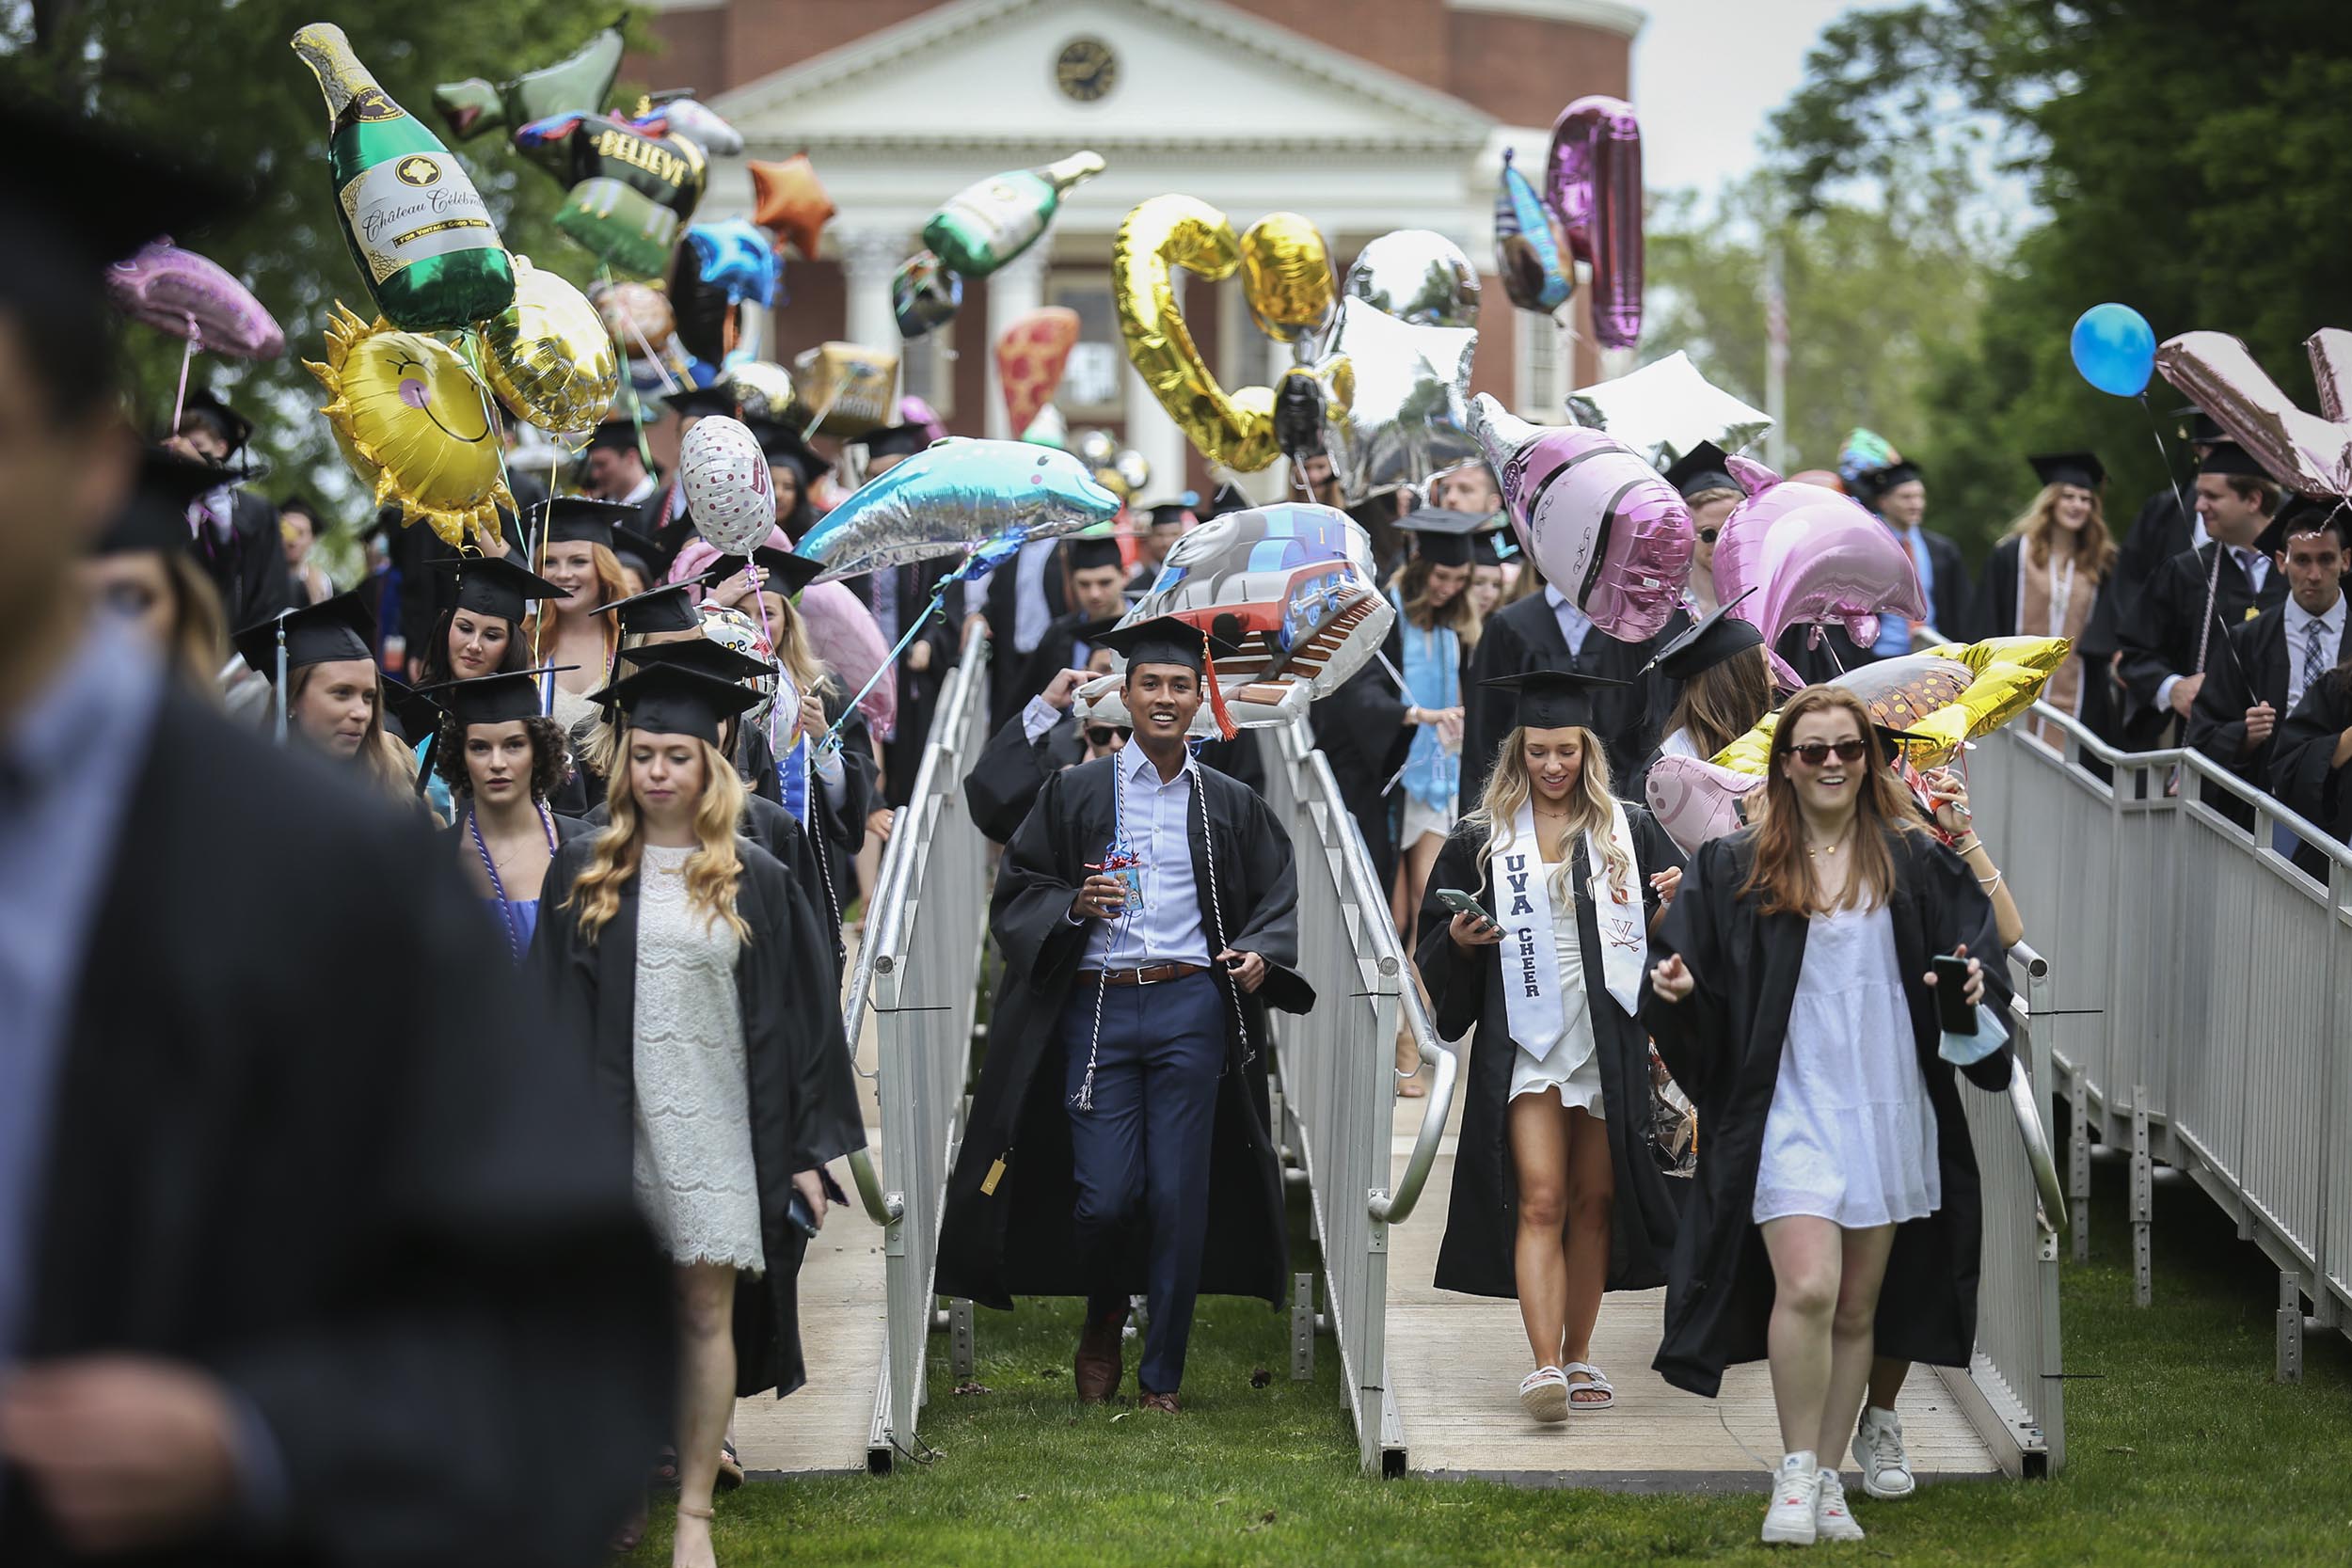 Graduates walking down ramps carrying various balloons